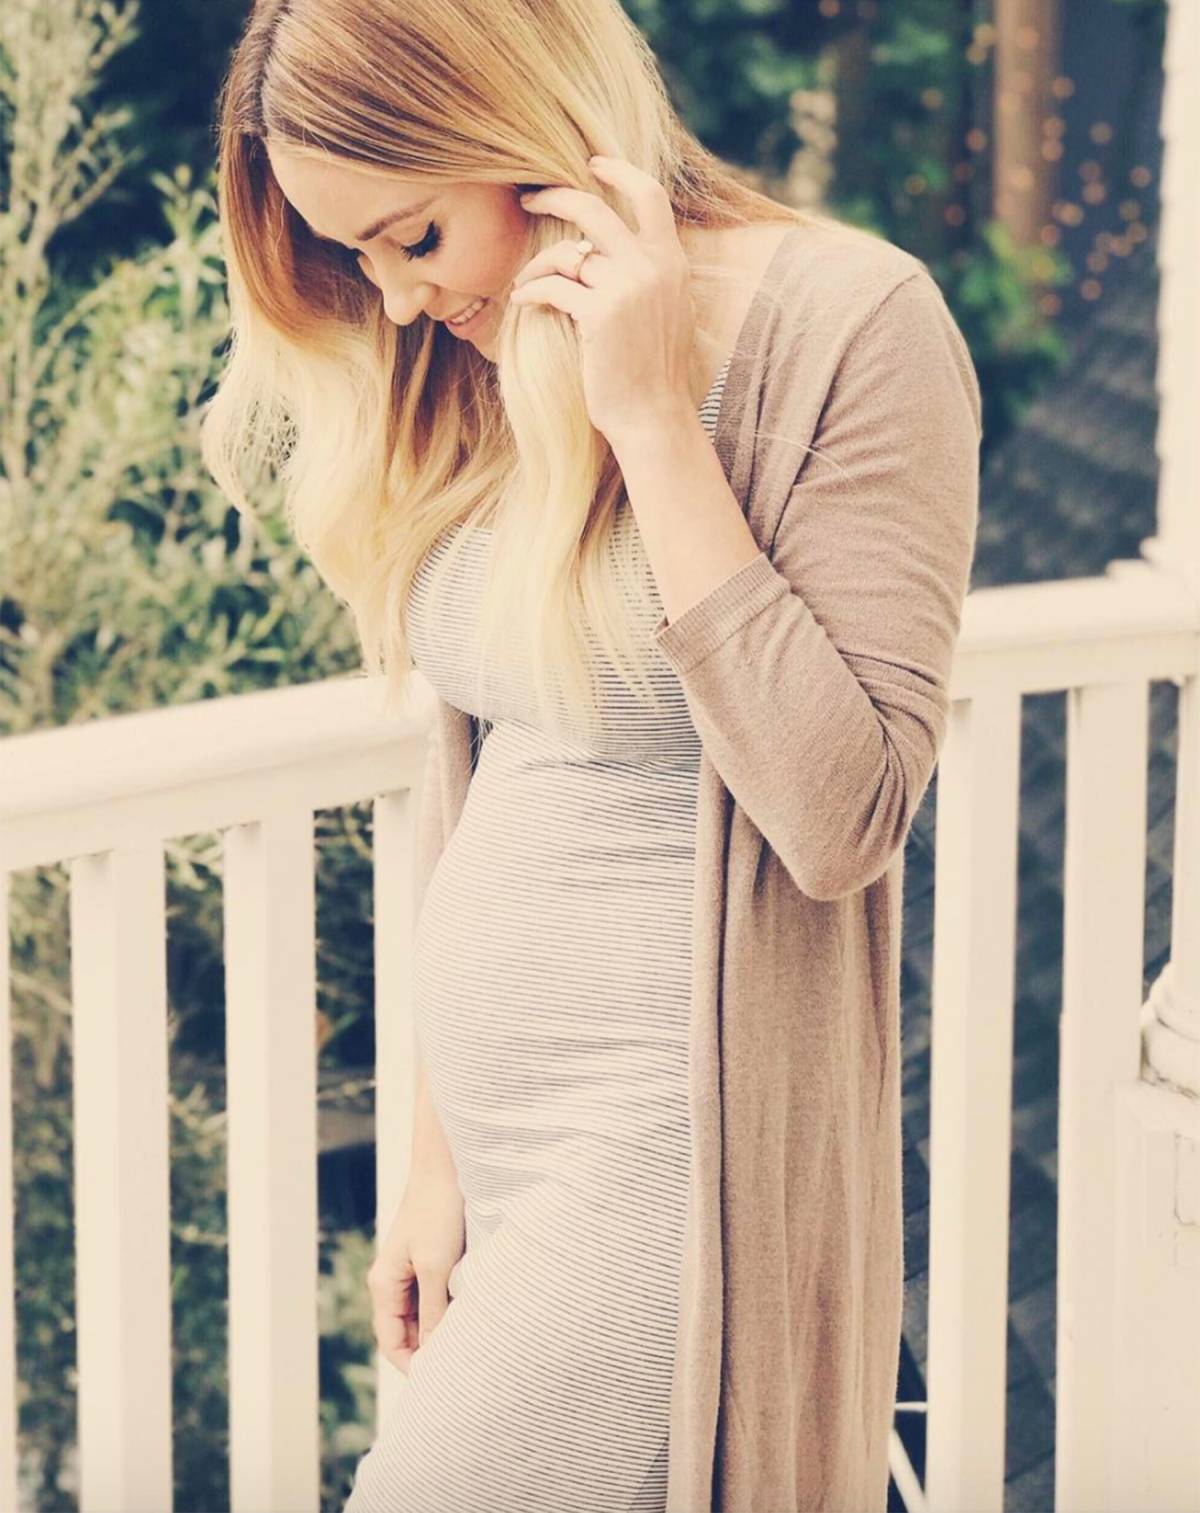 Pregnant Lauren Conrad Debuts Spring Fashion Collection!: Photo